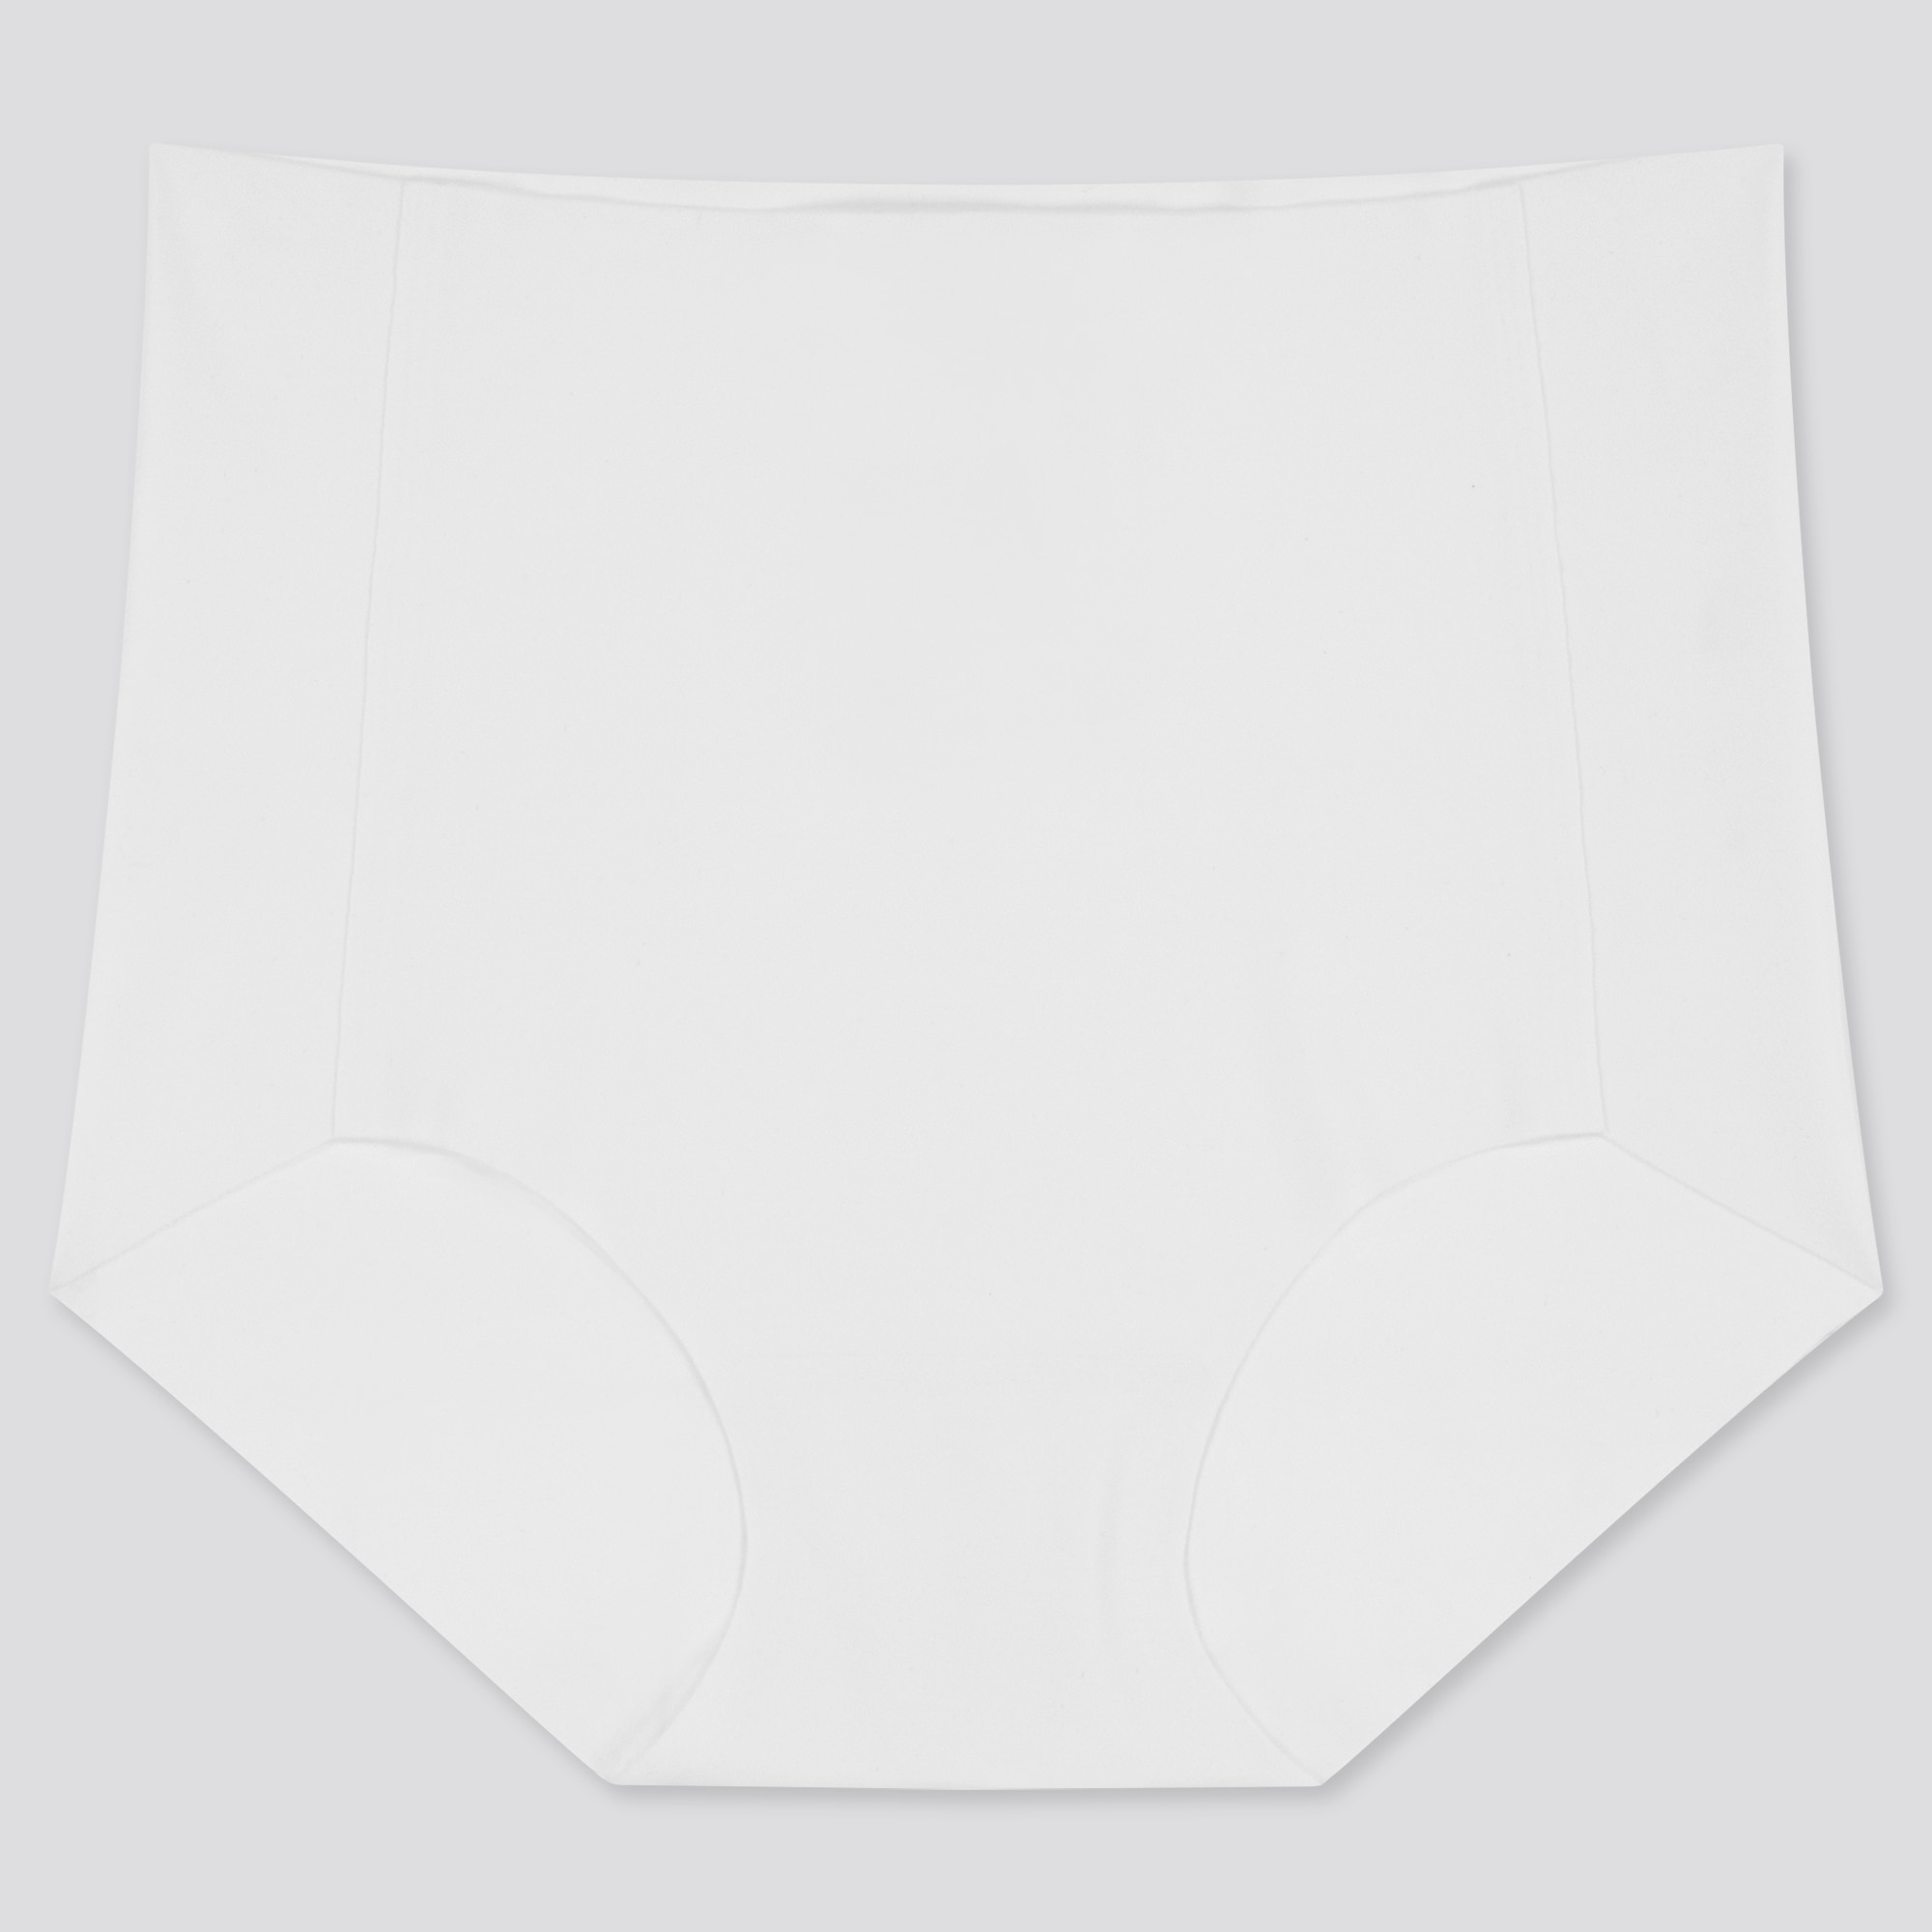 Uniqlo Ultra Seamless Panties/Cd Women